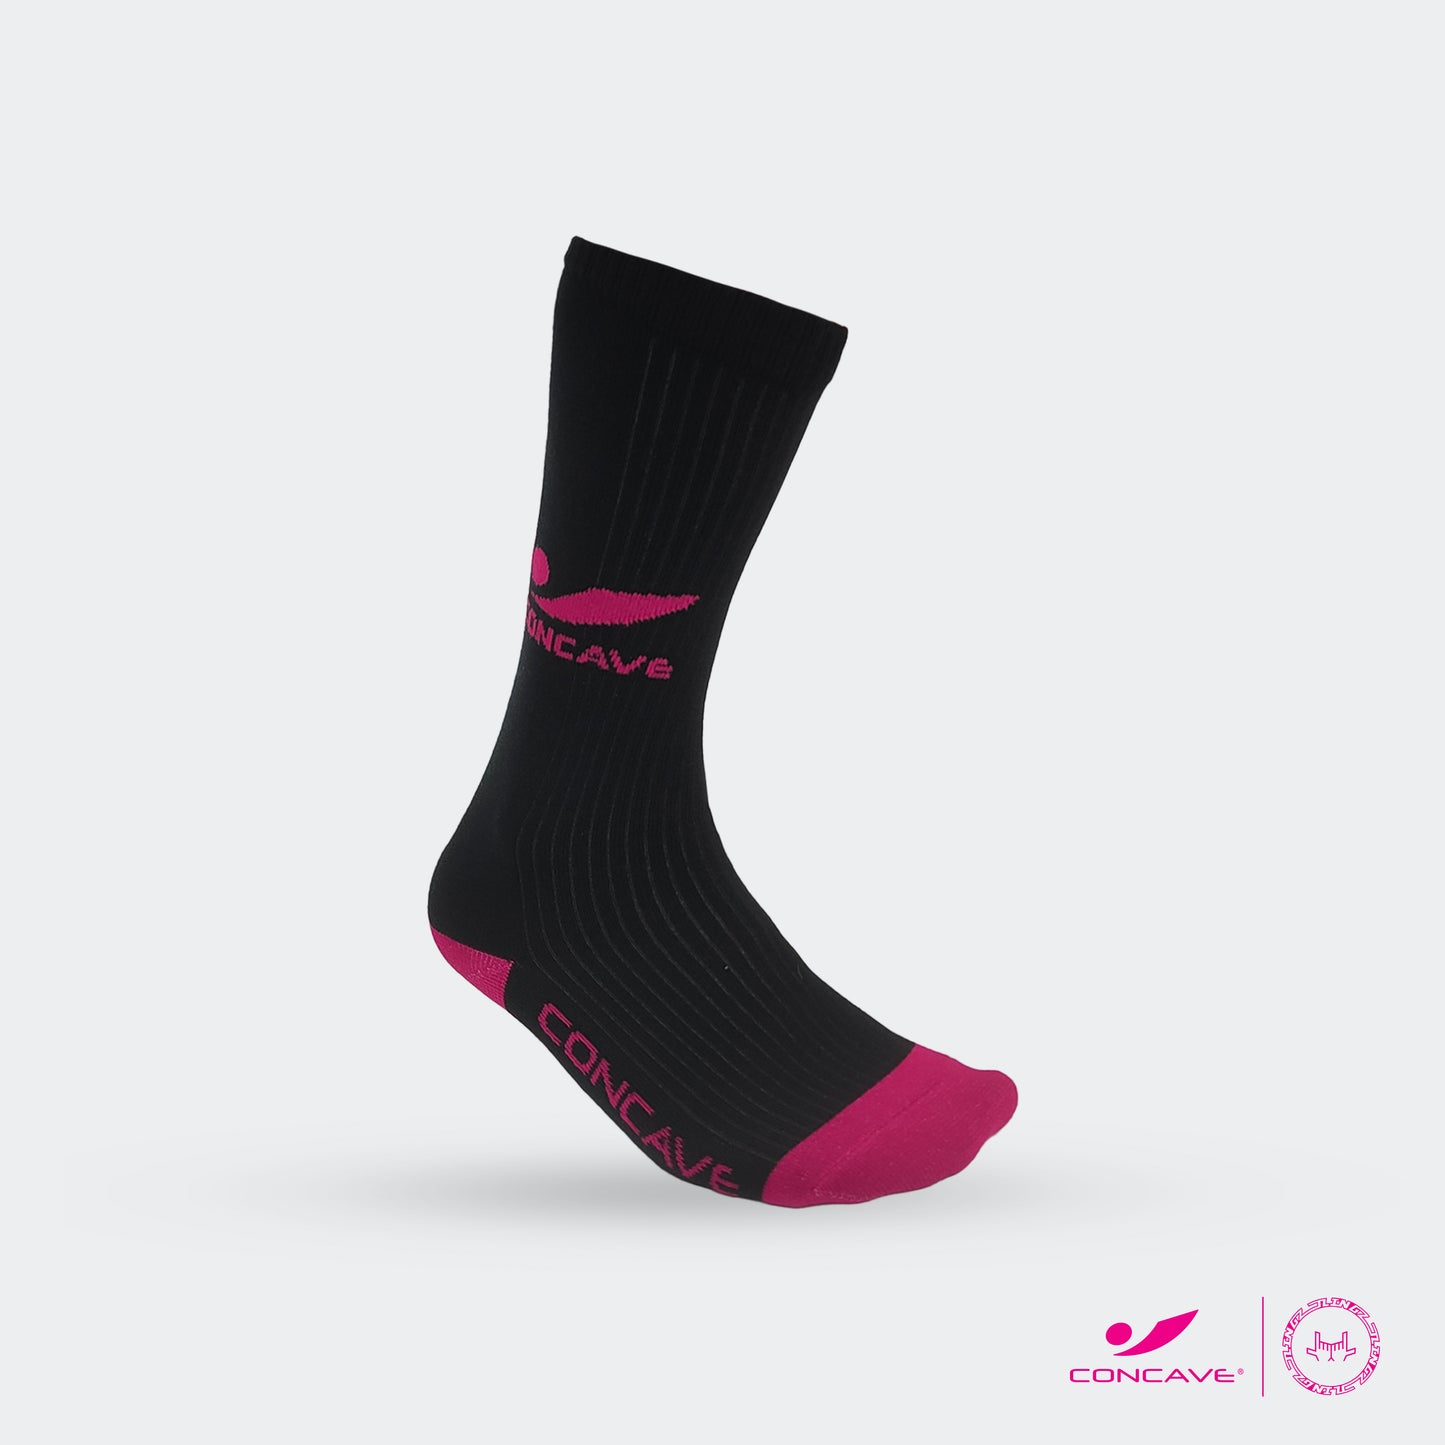 Concave x JLingz Crew Socks - Black/Deep Pink